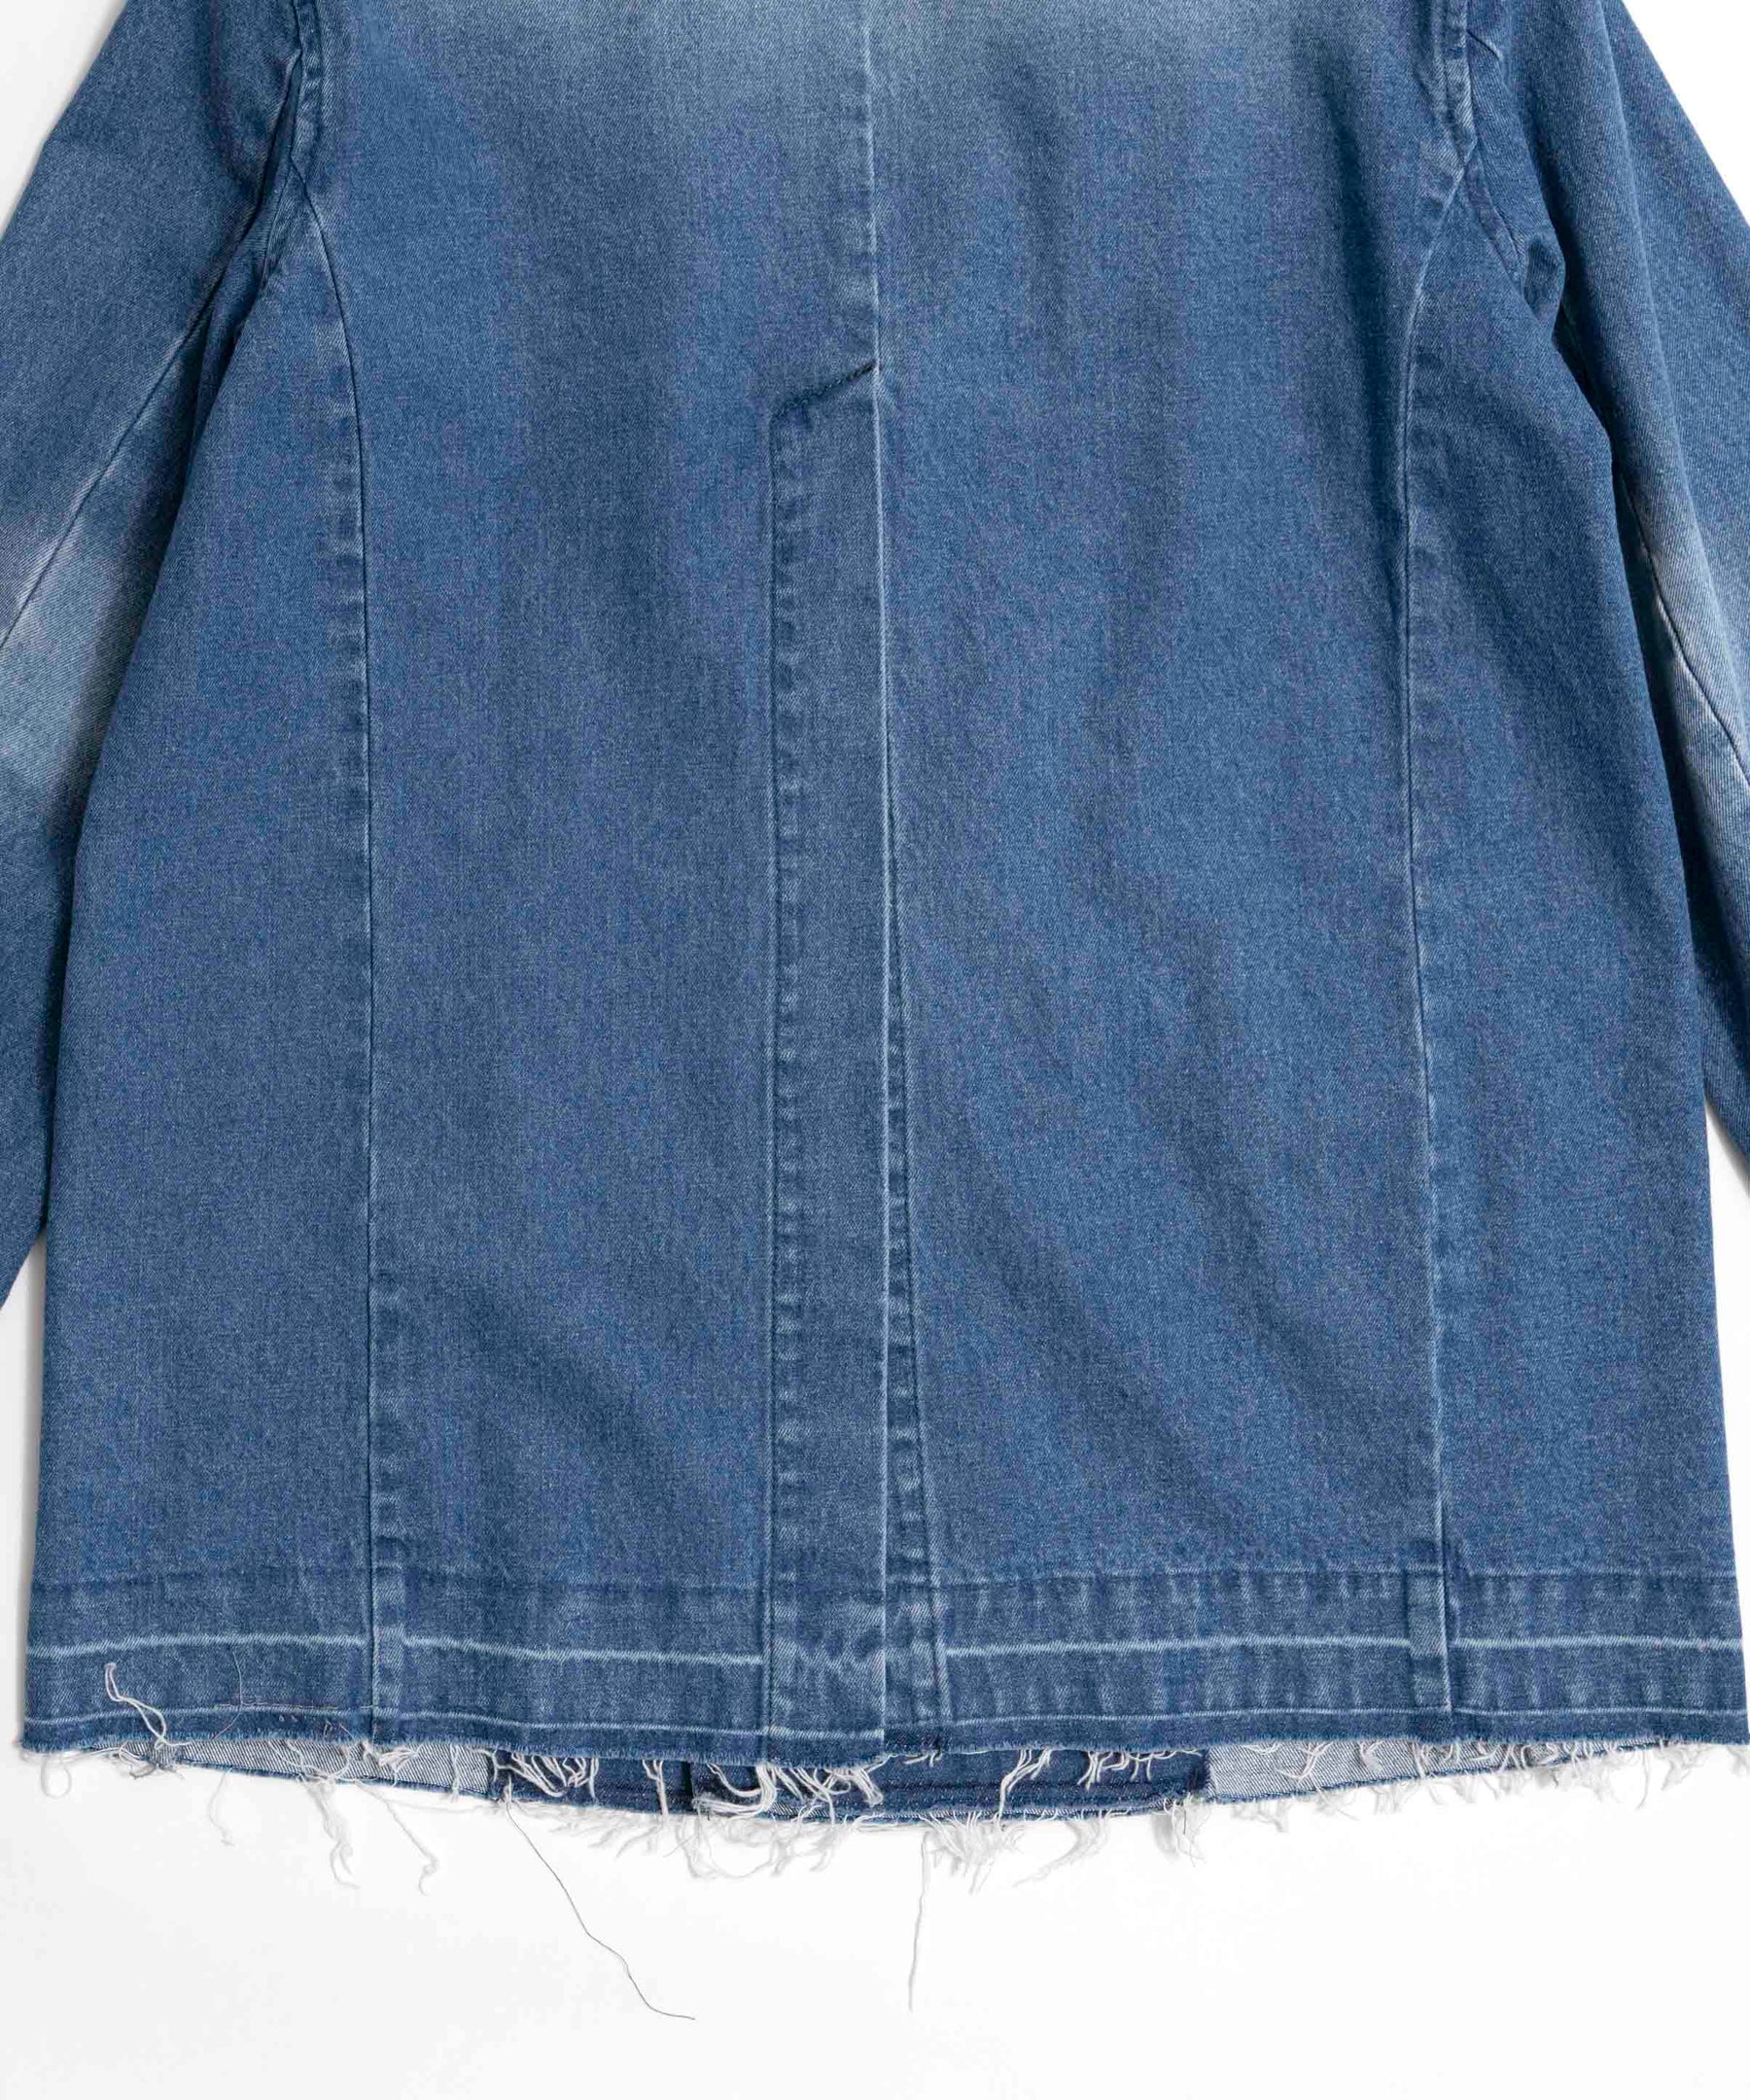 【SALE】Denim Tailored Jacket